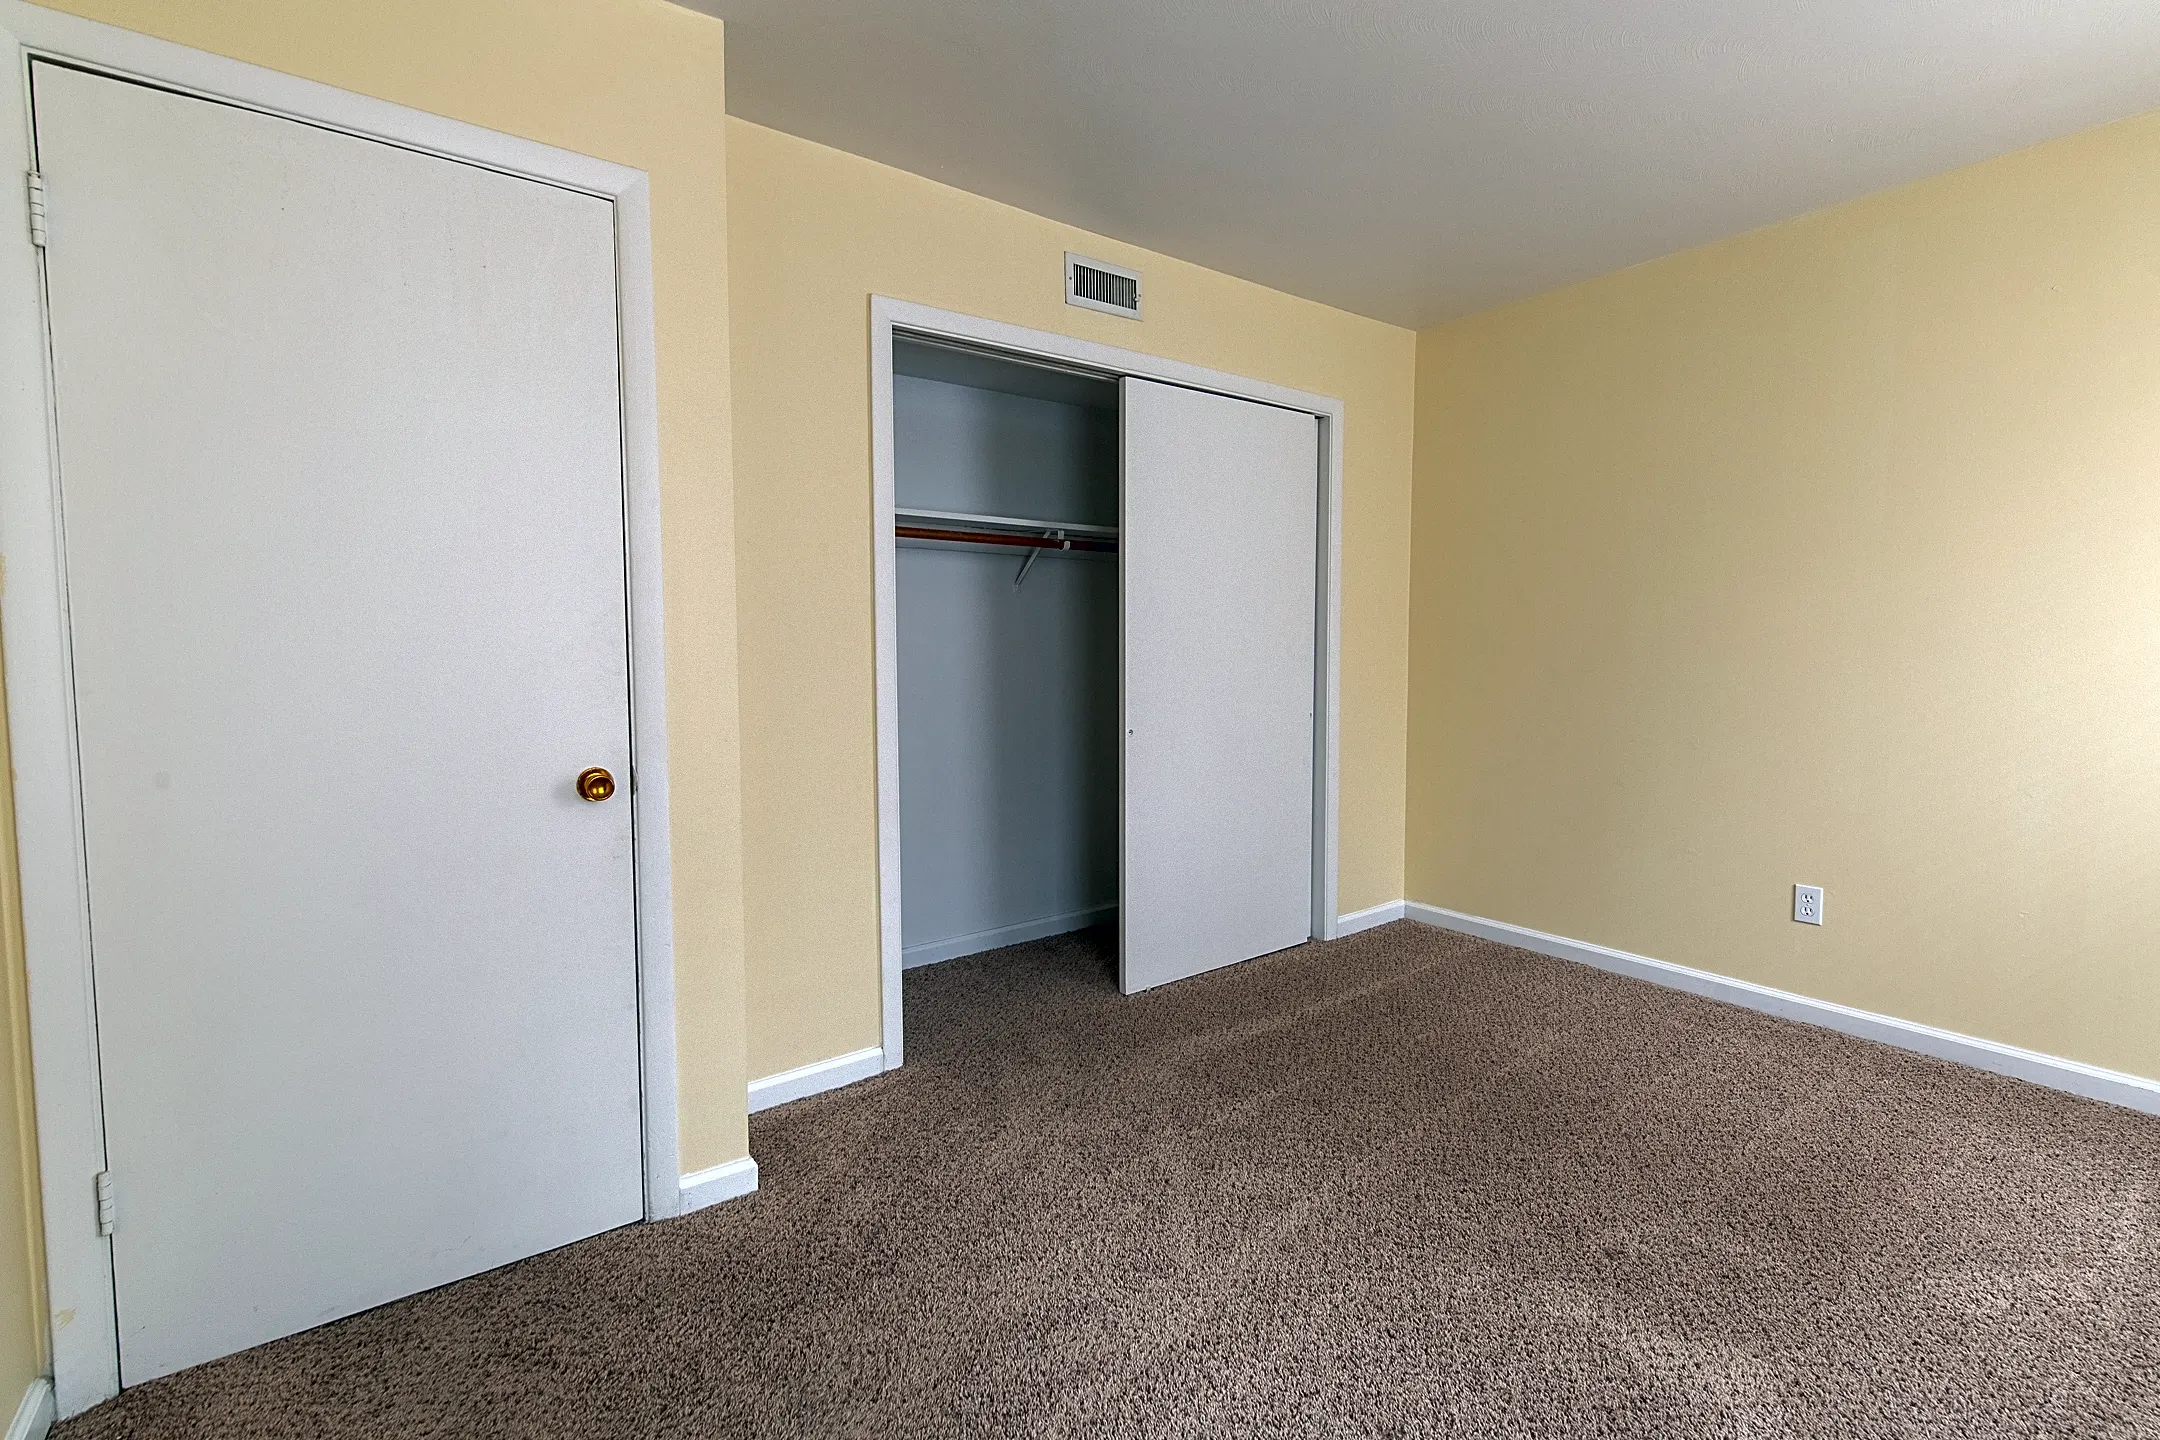 Bedroom - InTempus Property Management - Indianapolis, IN